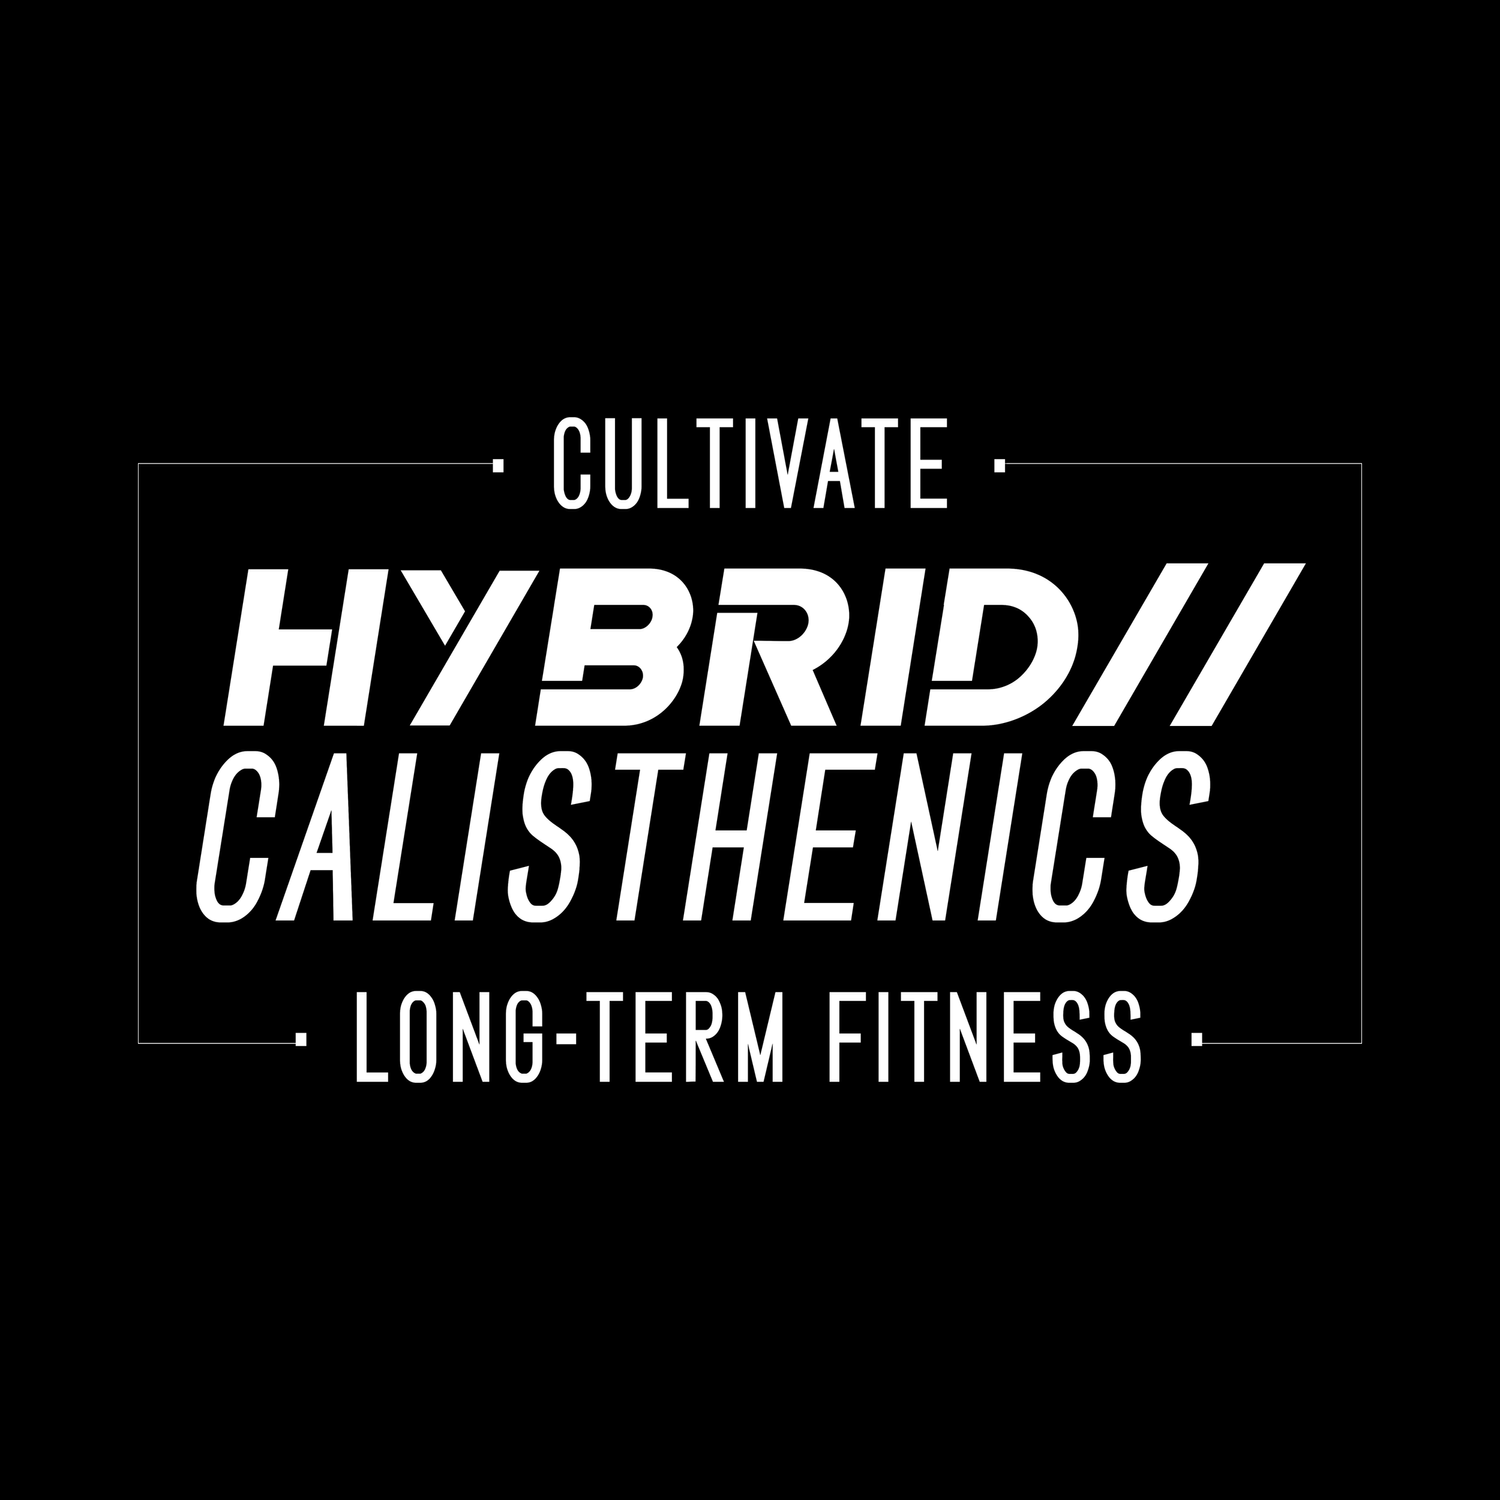 www.hybridcalisthenics.com